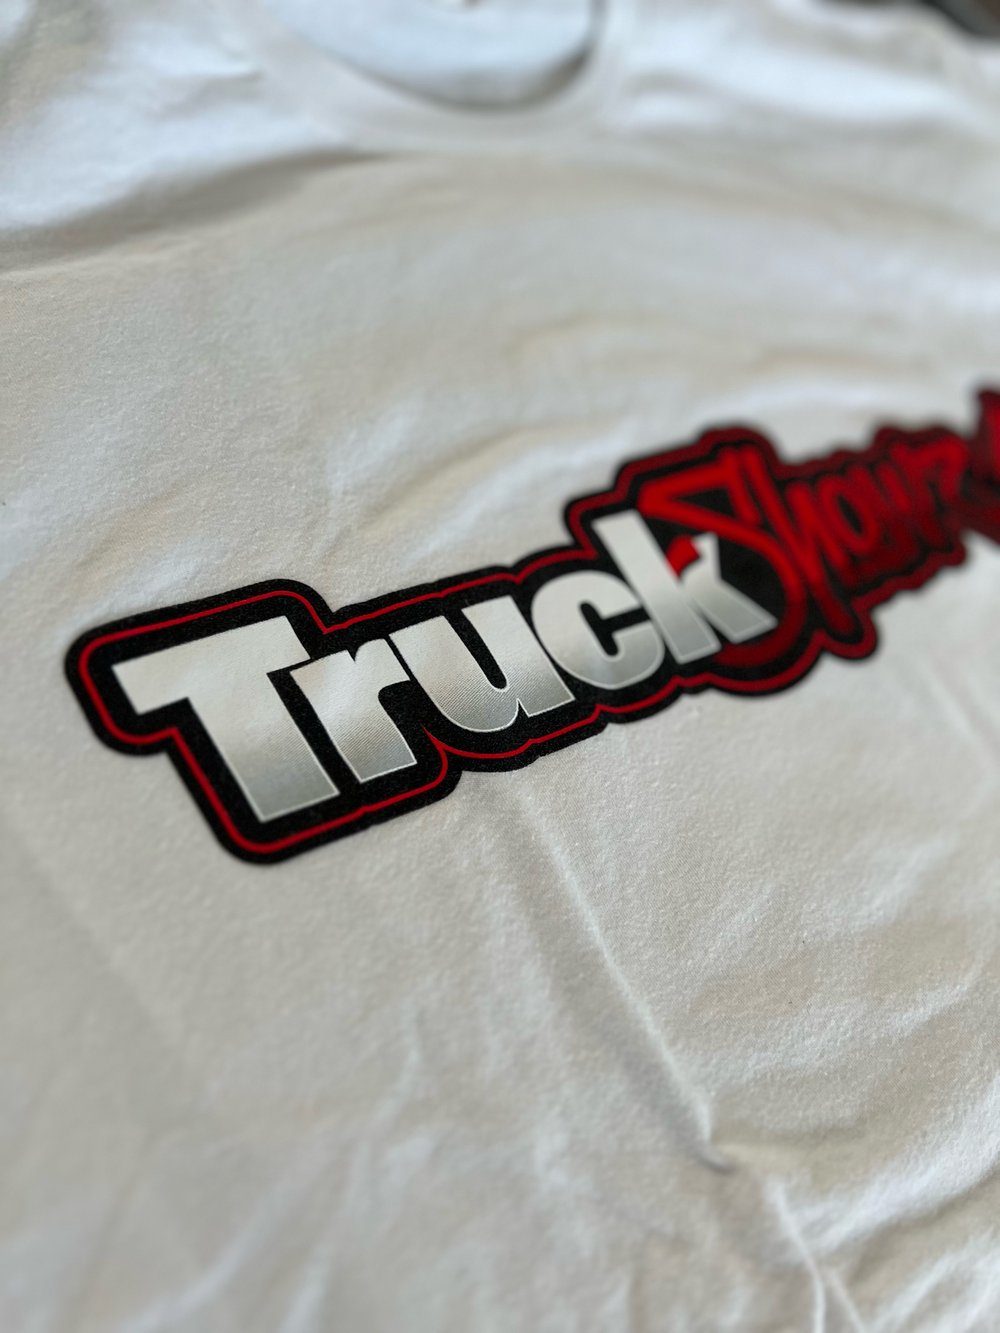 TruckShowz Next Level Tee (Front Logo)